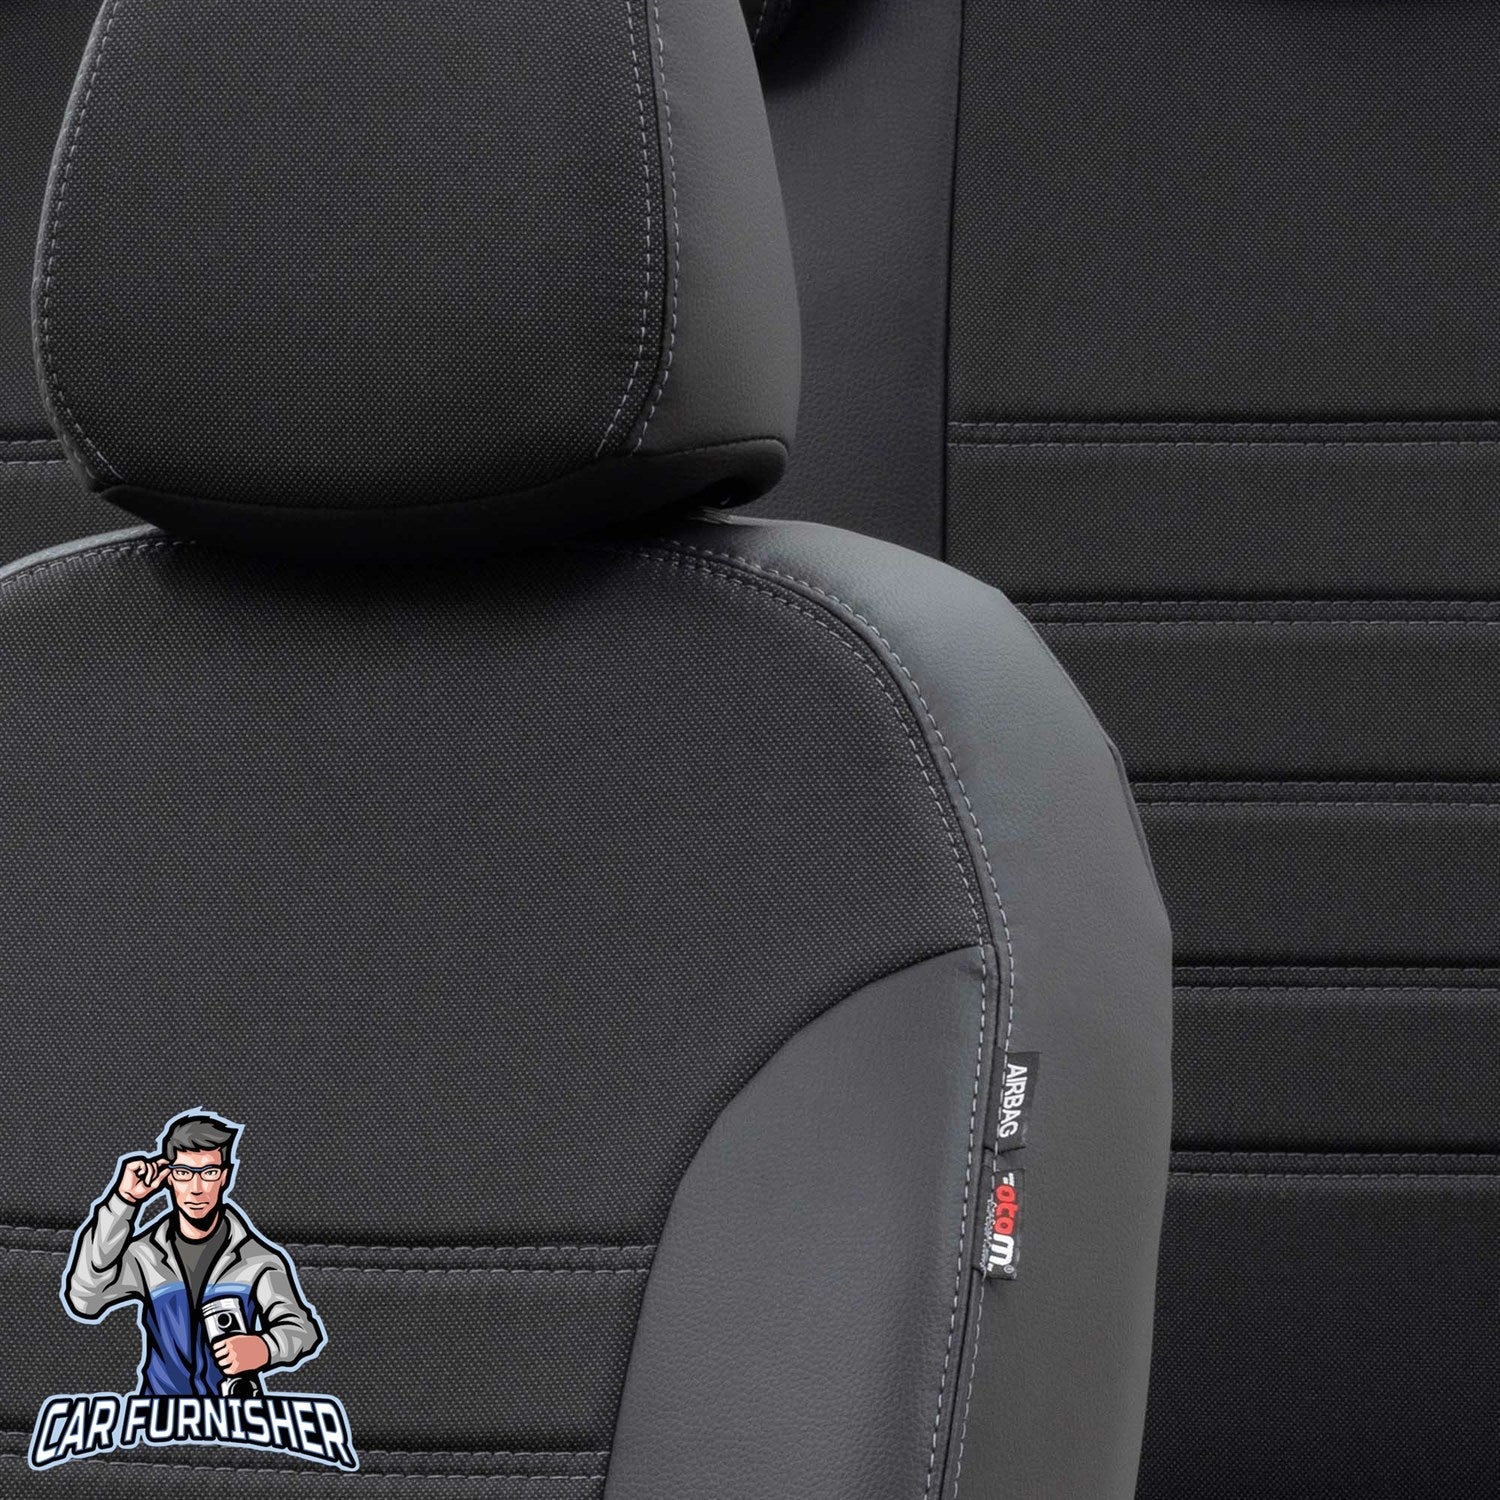 Toyota Camry Seat Cover Paris Leather & Jacquard Design Black Leather & Jacquard Fabric